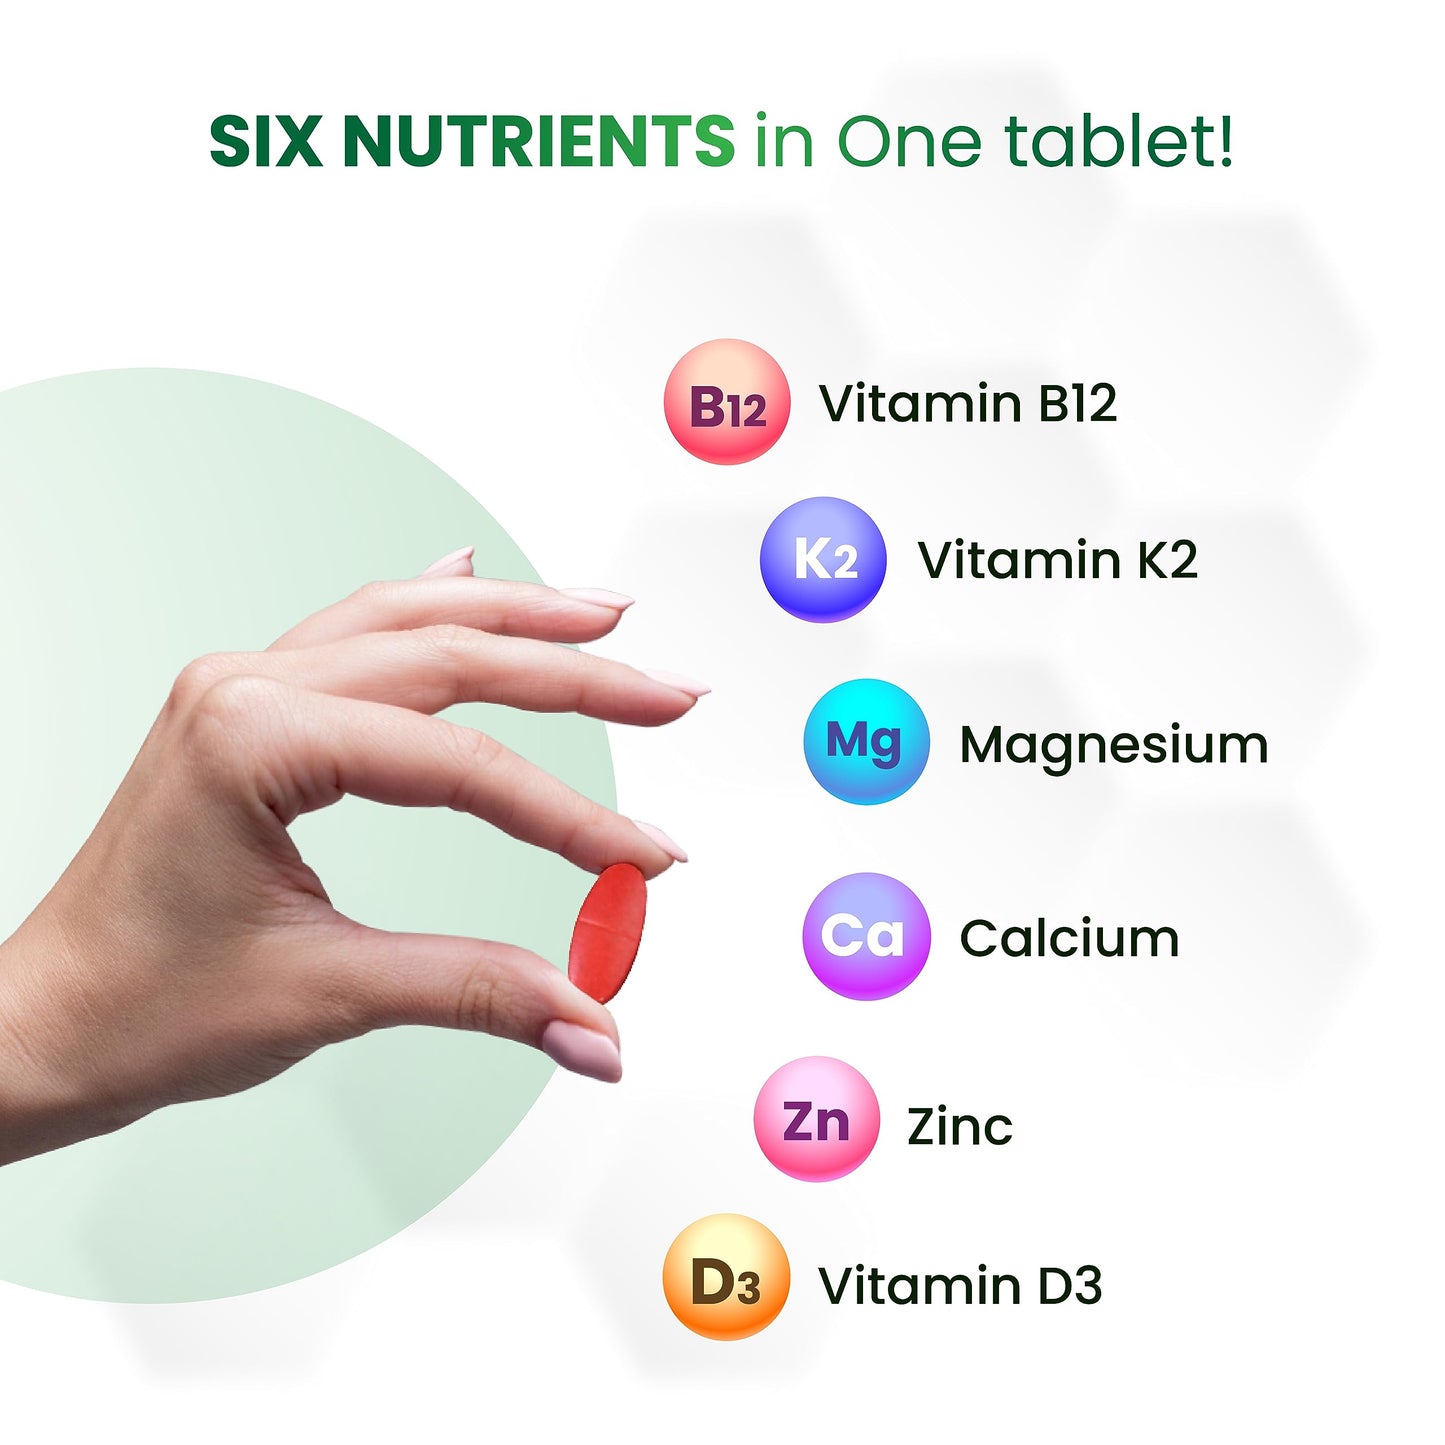 Himalayan Organics Calcium Magnesium Zinc Vitamin D3, B12 & K - 120 Vegetarian Tablets